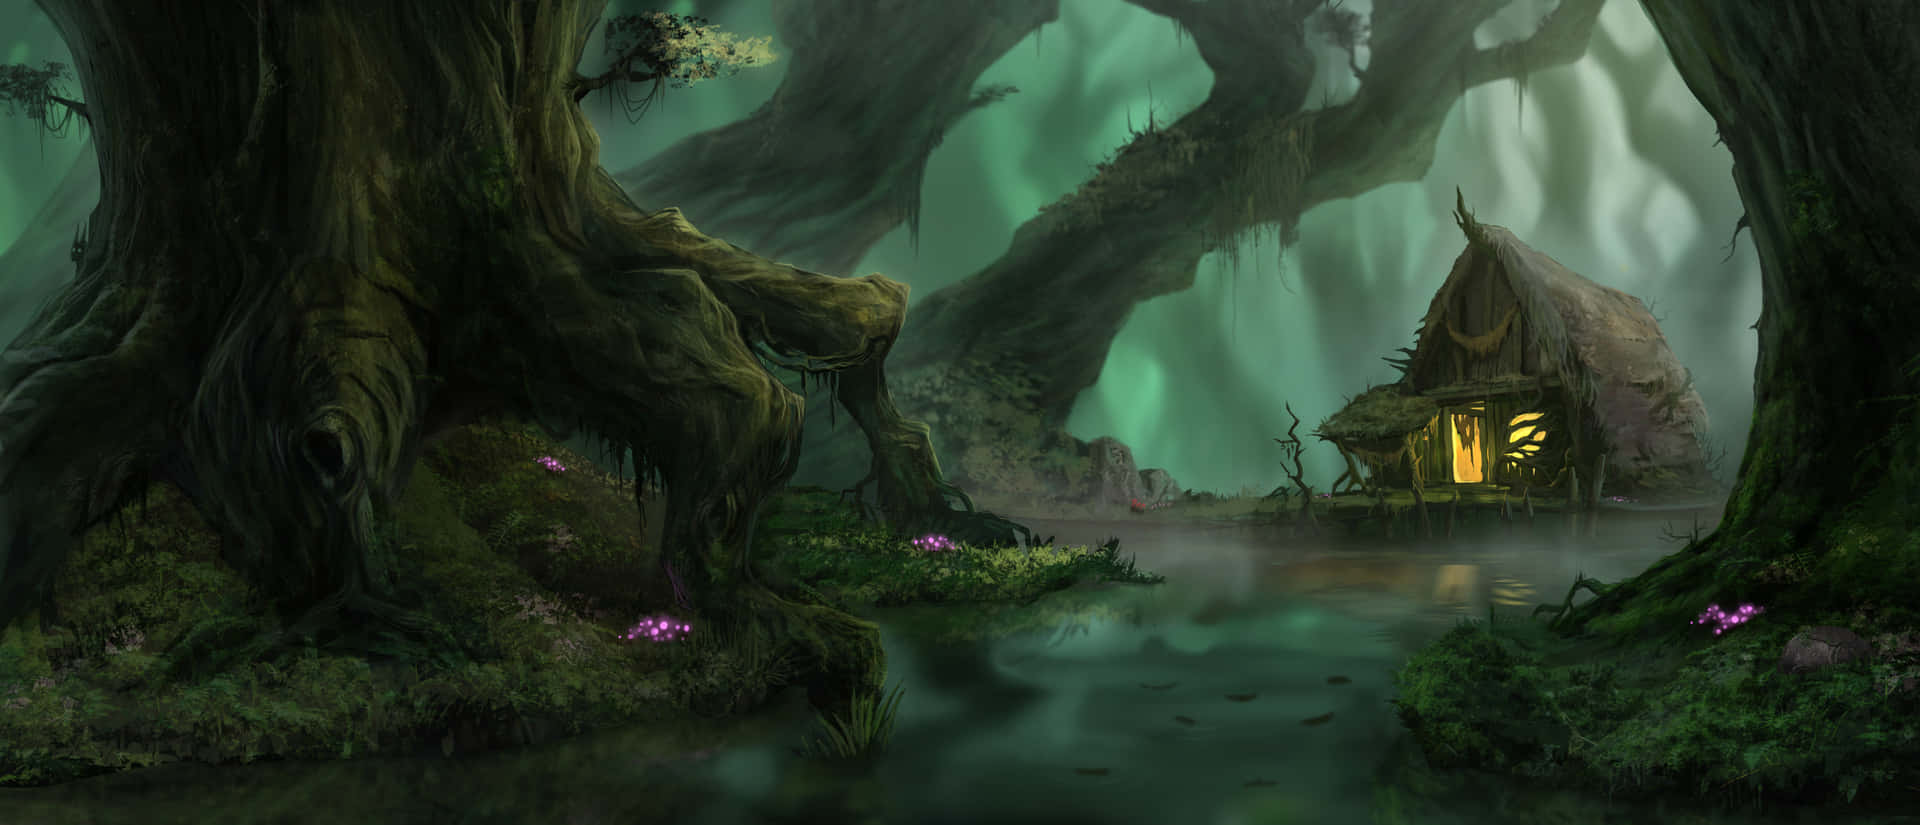 Magical Forest Landscape Desktop Wallpaper